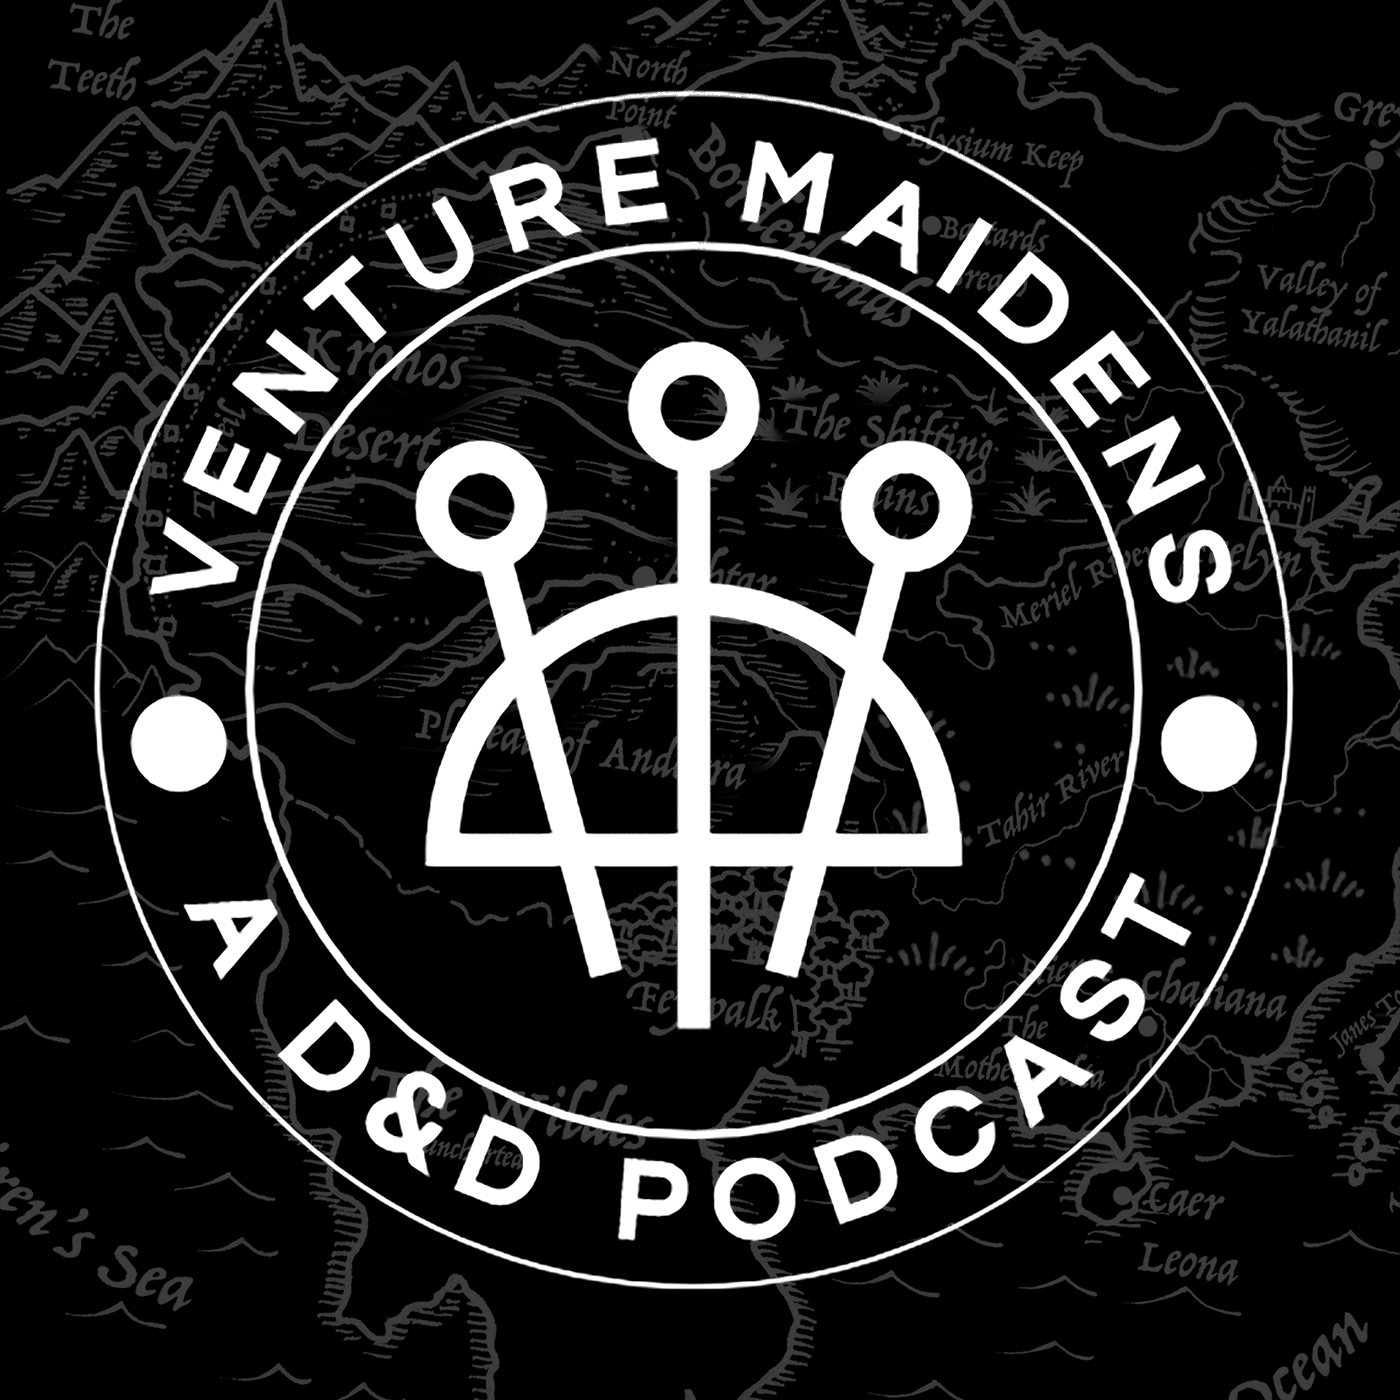 Venture Maidens | A D&D Podcast